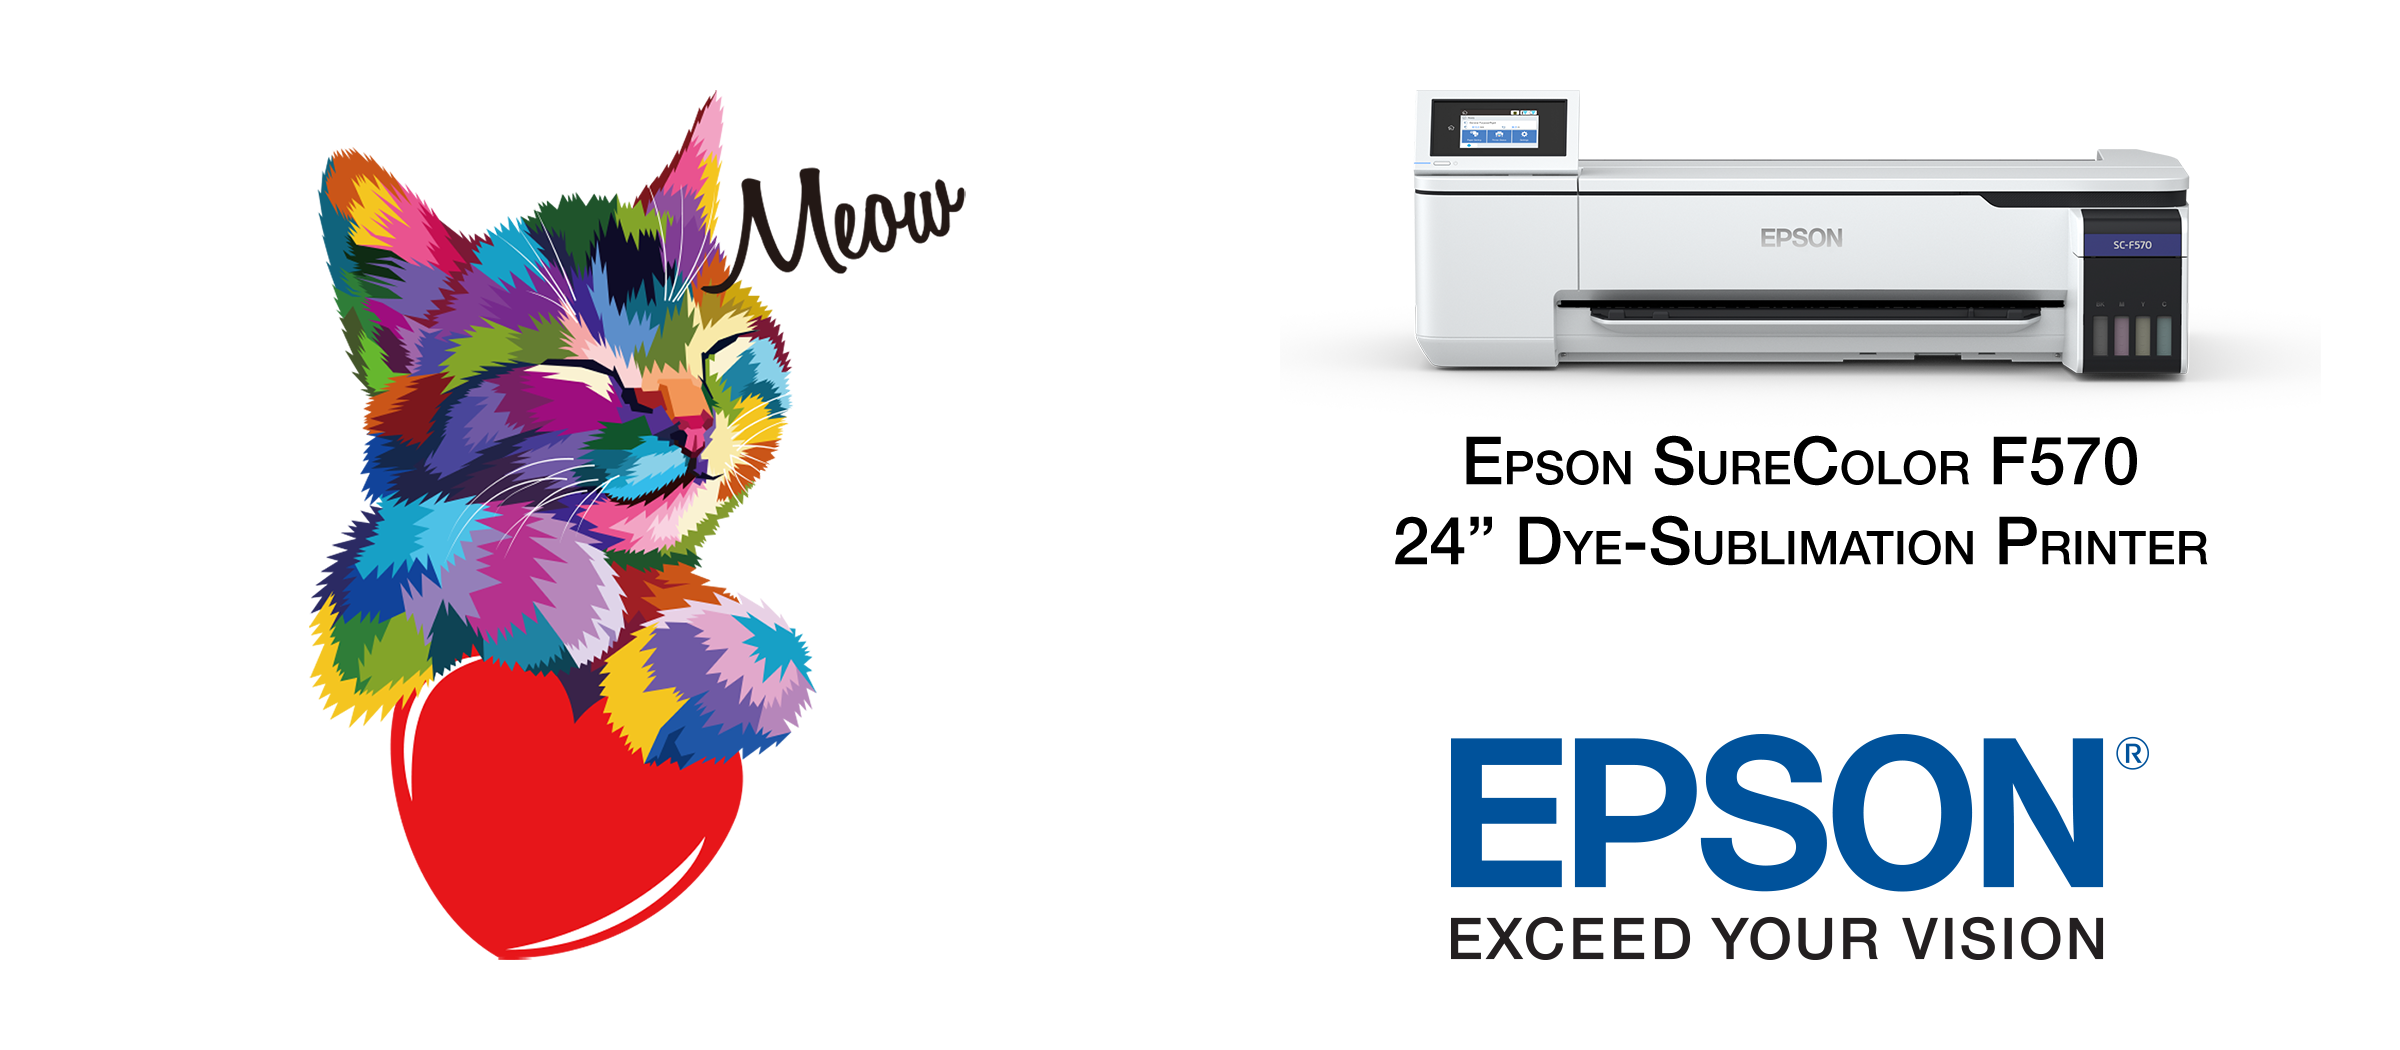 Epson Dye Sublimation SC-F570 Cat Mug - A vibrant cat design printed on a mug using the Epson F570 printer